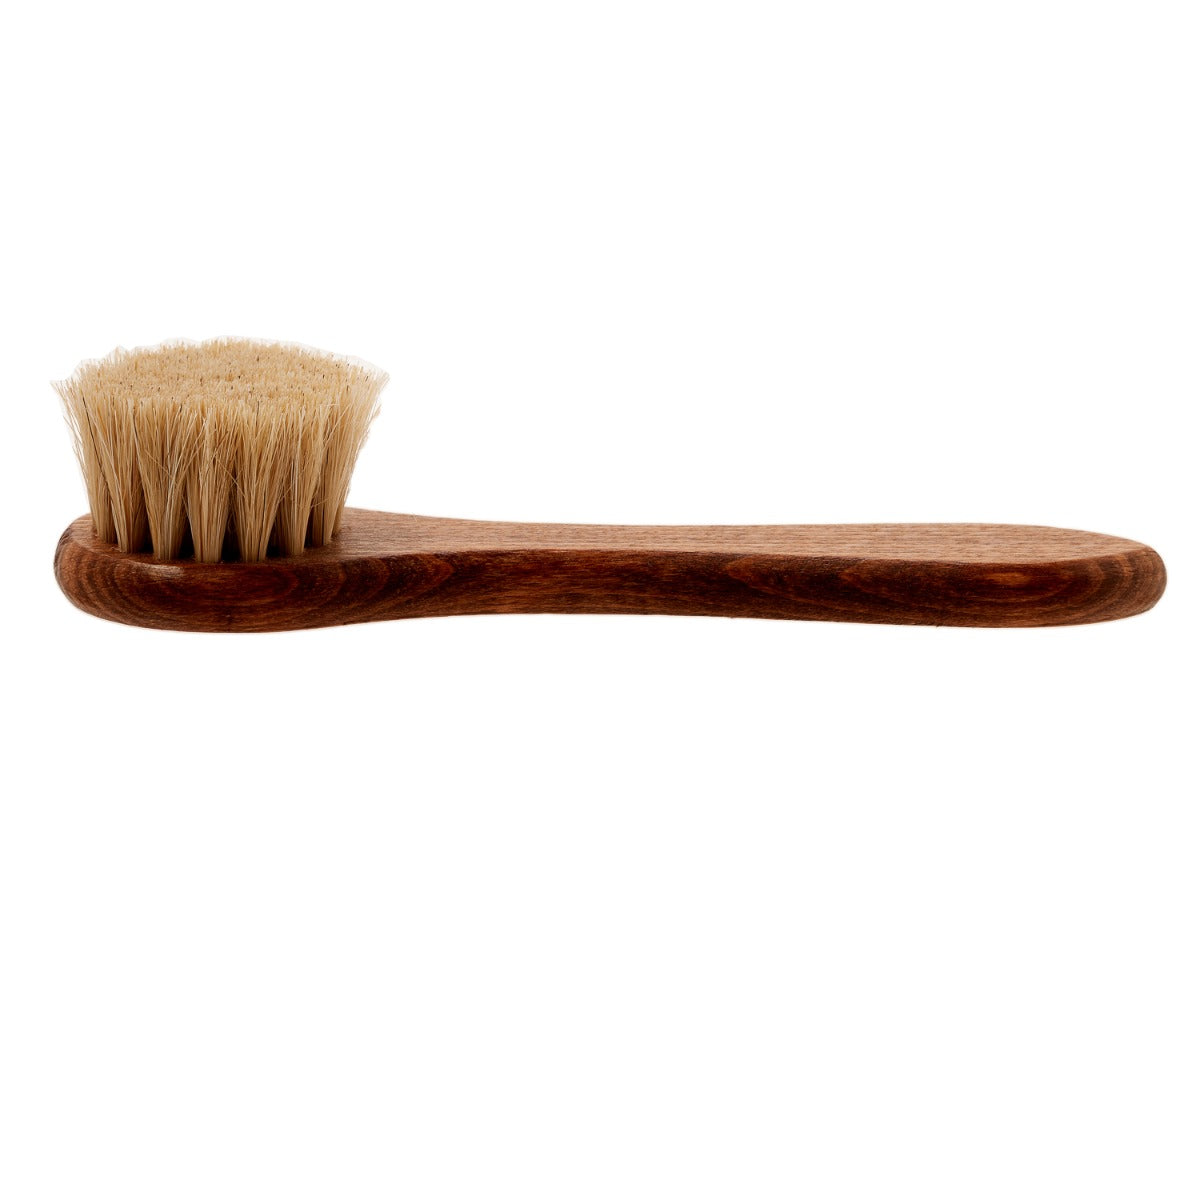 Meltonian Dauber Brush | Premium Horse Hair Applicator Brush for Leather  Care | Ideal Horsehair Shoe Brush for Applying Cream | Use with Meltonian